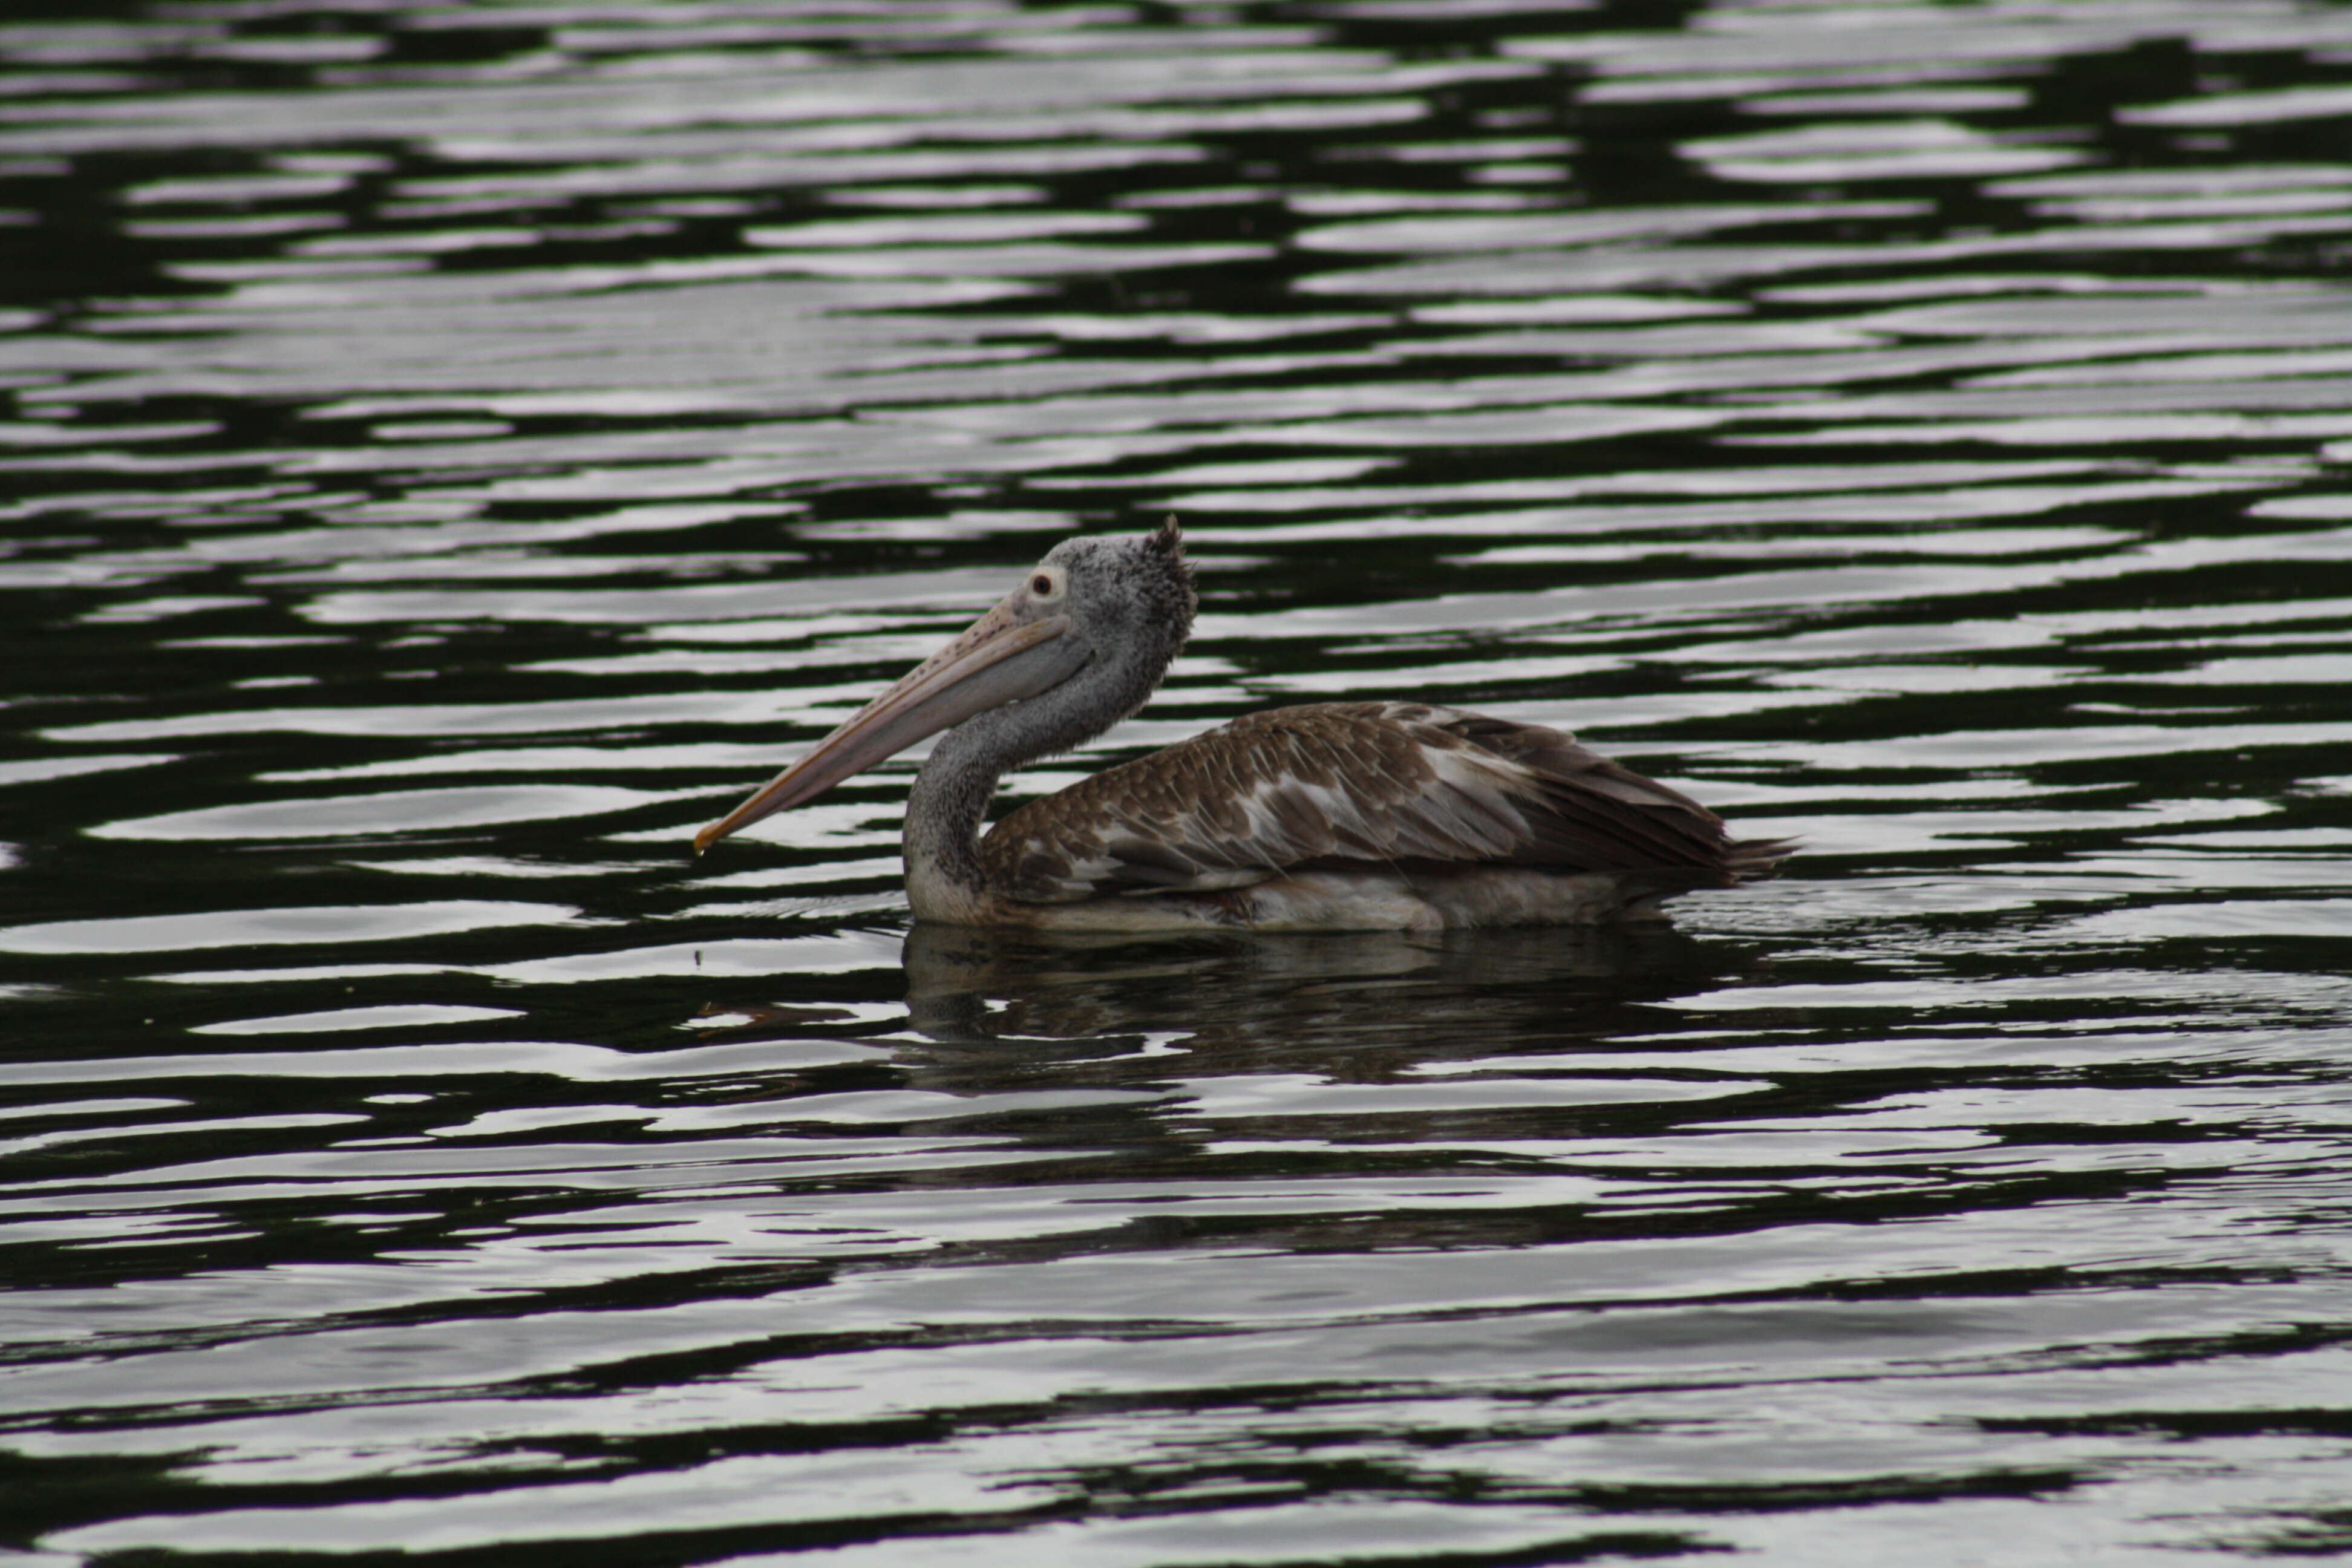 Image of Grey Pelican